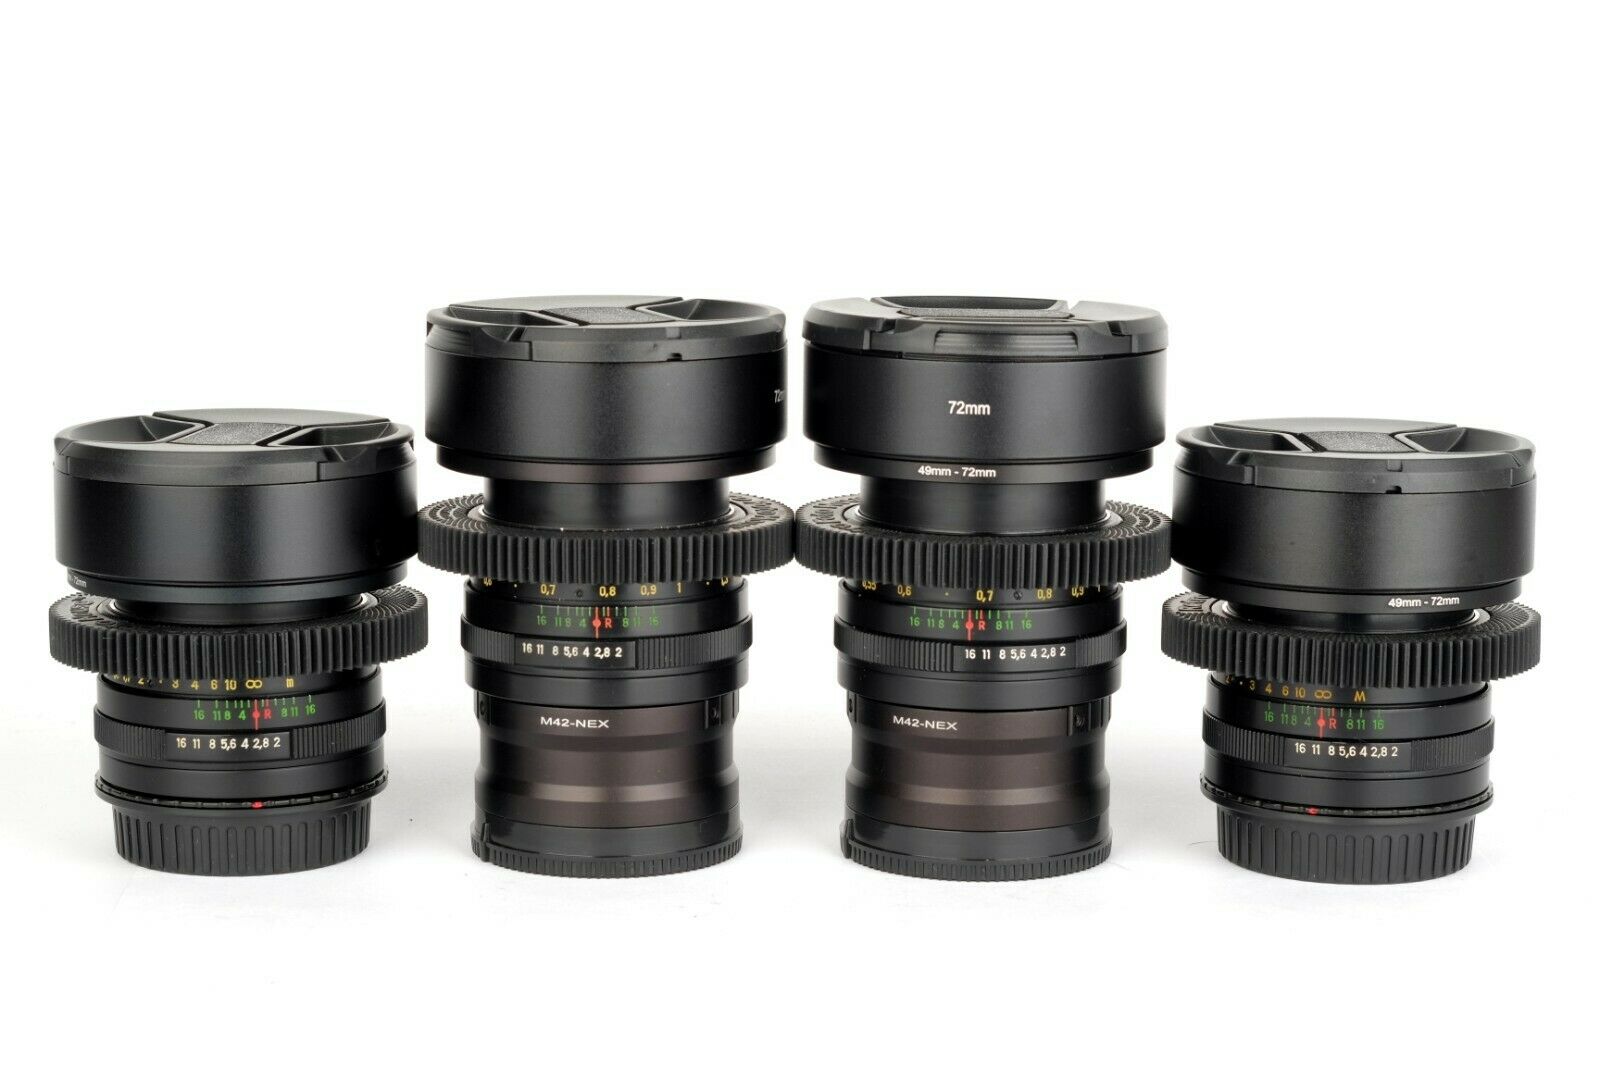 HELIOS 44M-4 Anamorphic Modded lens (1 PC)